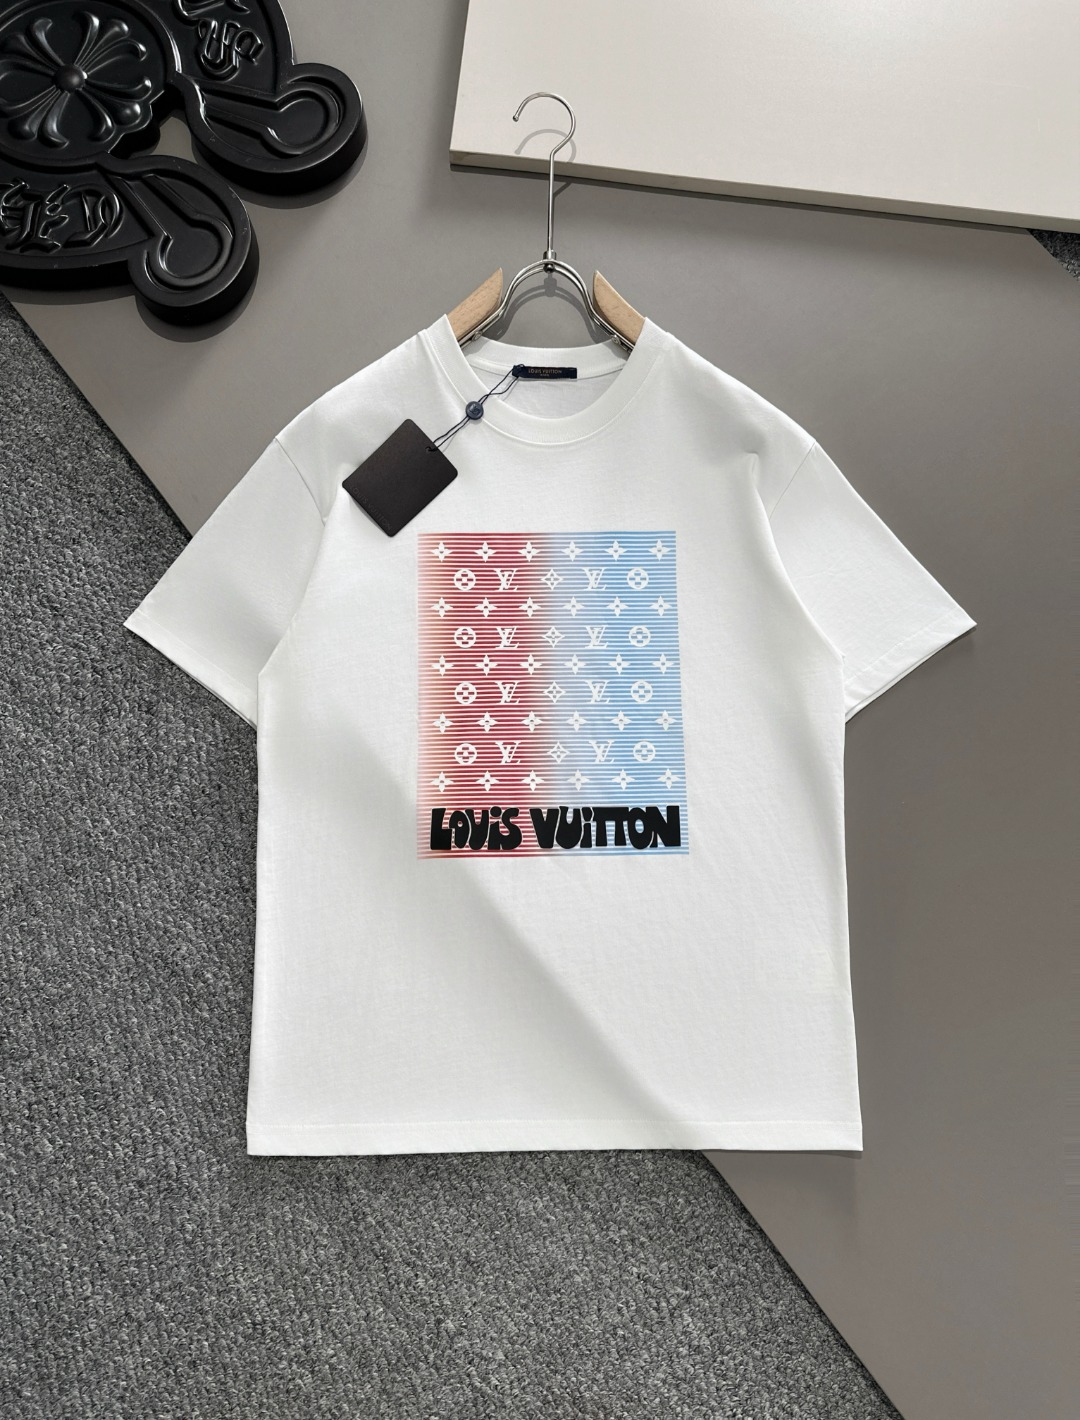 Louis Vuitton Kleding T-Shirt Zwart Wit Katoen Lente/Zomercollectie Fashion Korte mouw